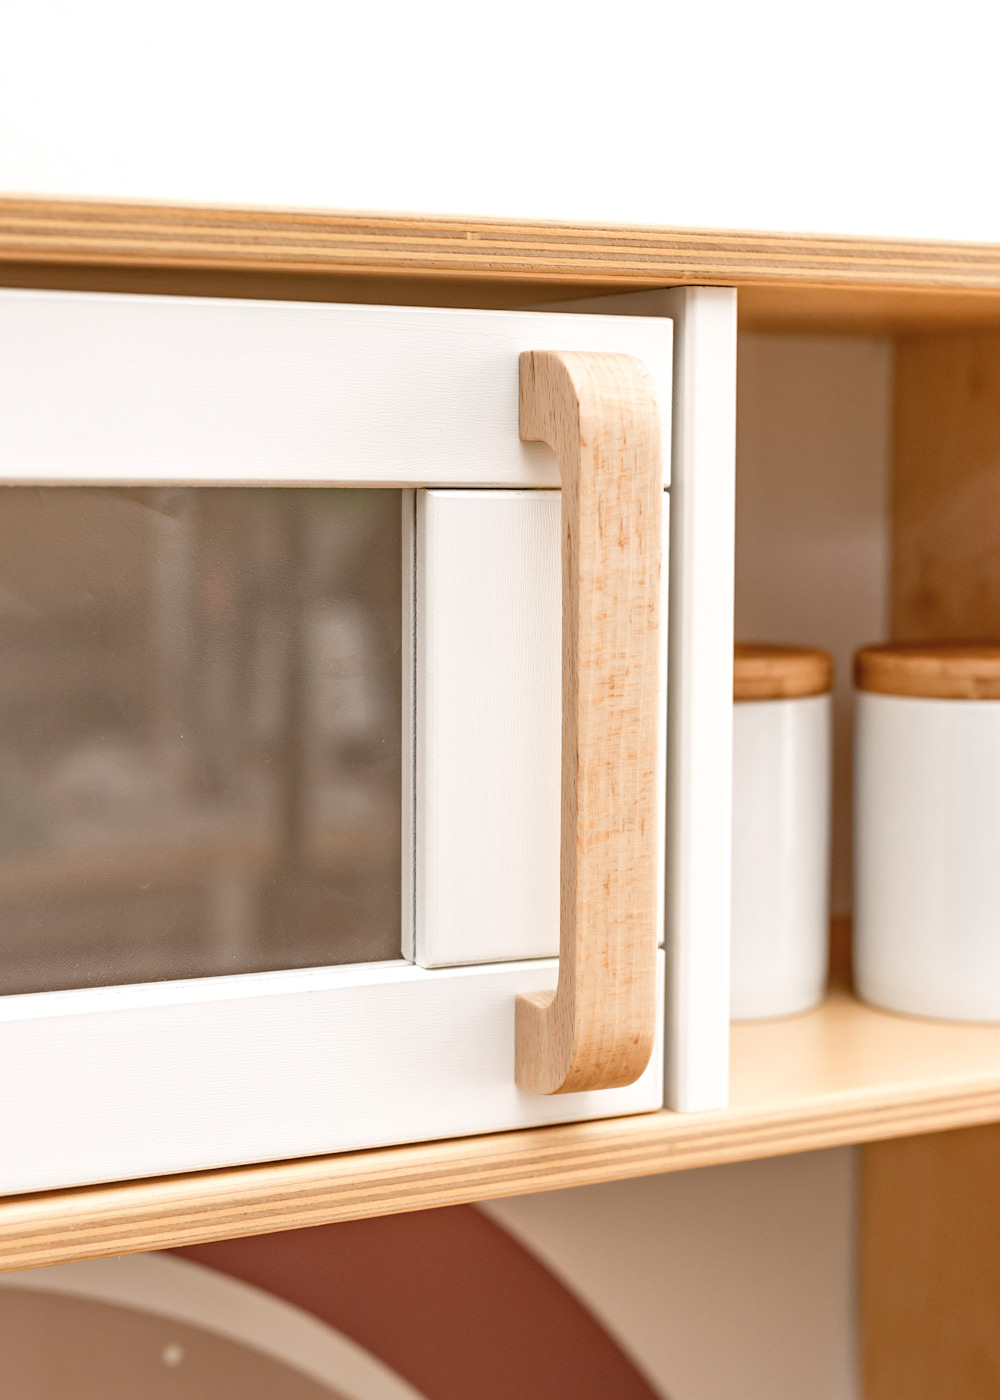  Wooden handles for IKEA DUKTIG play kitchen